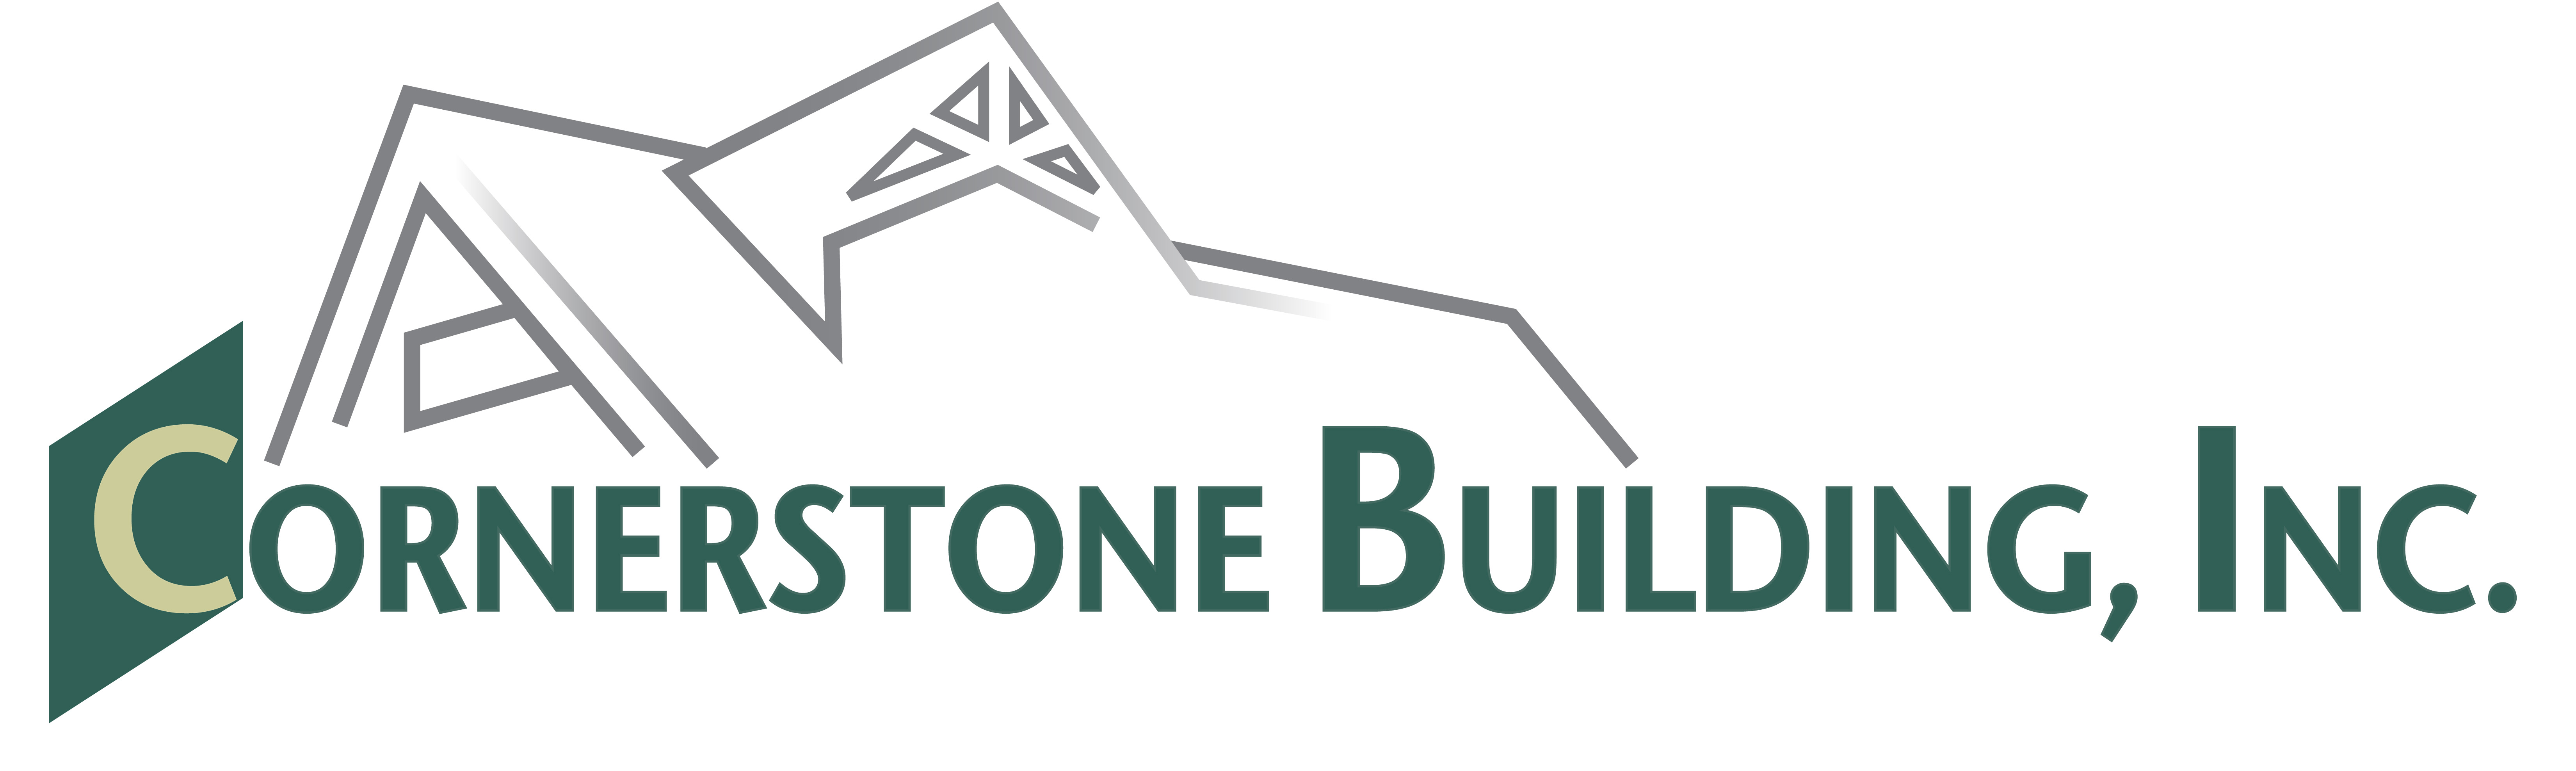 Cornerstone Building, Inc. company logo